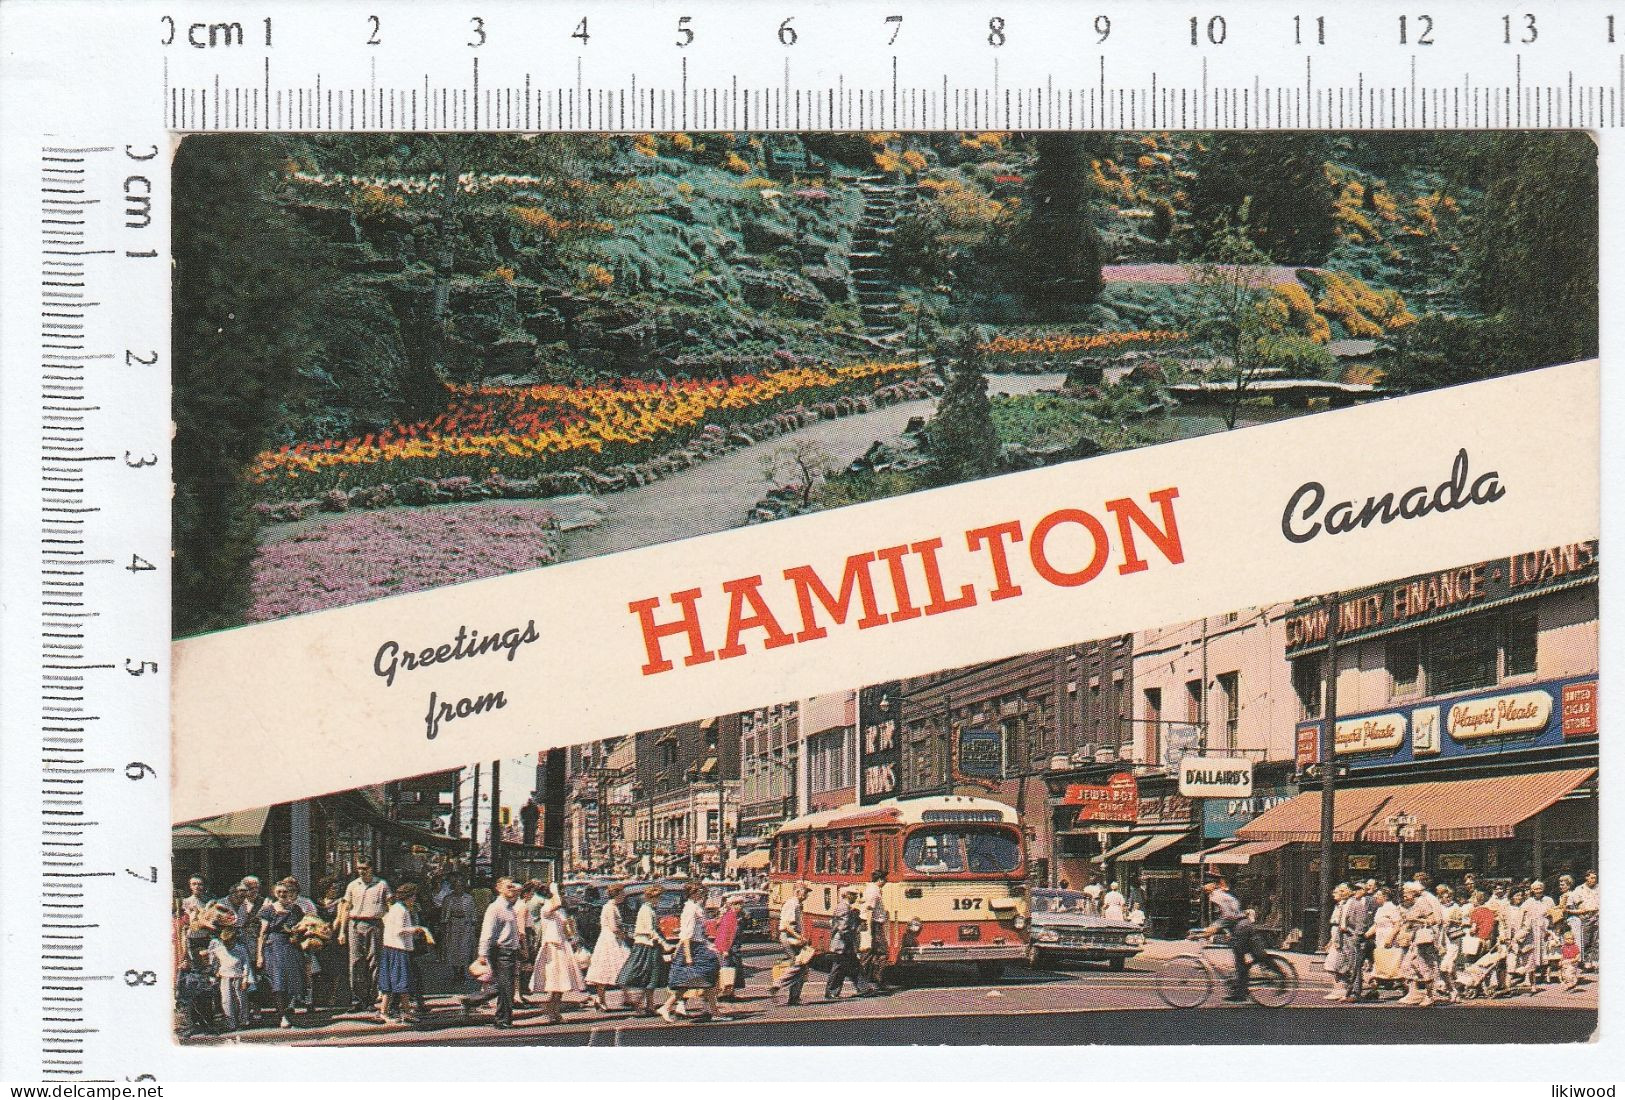 Hamilton, Ontario, Canada - 1967 - Hamilton